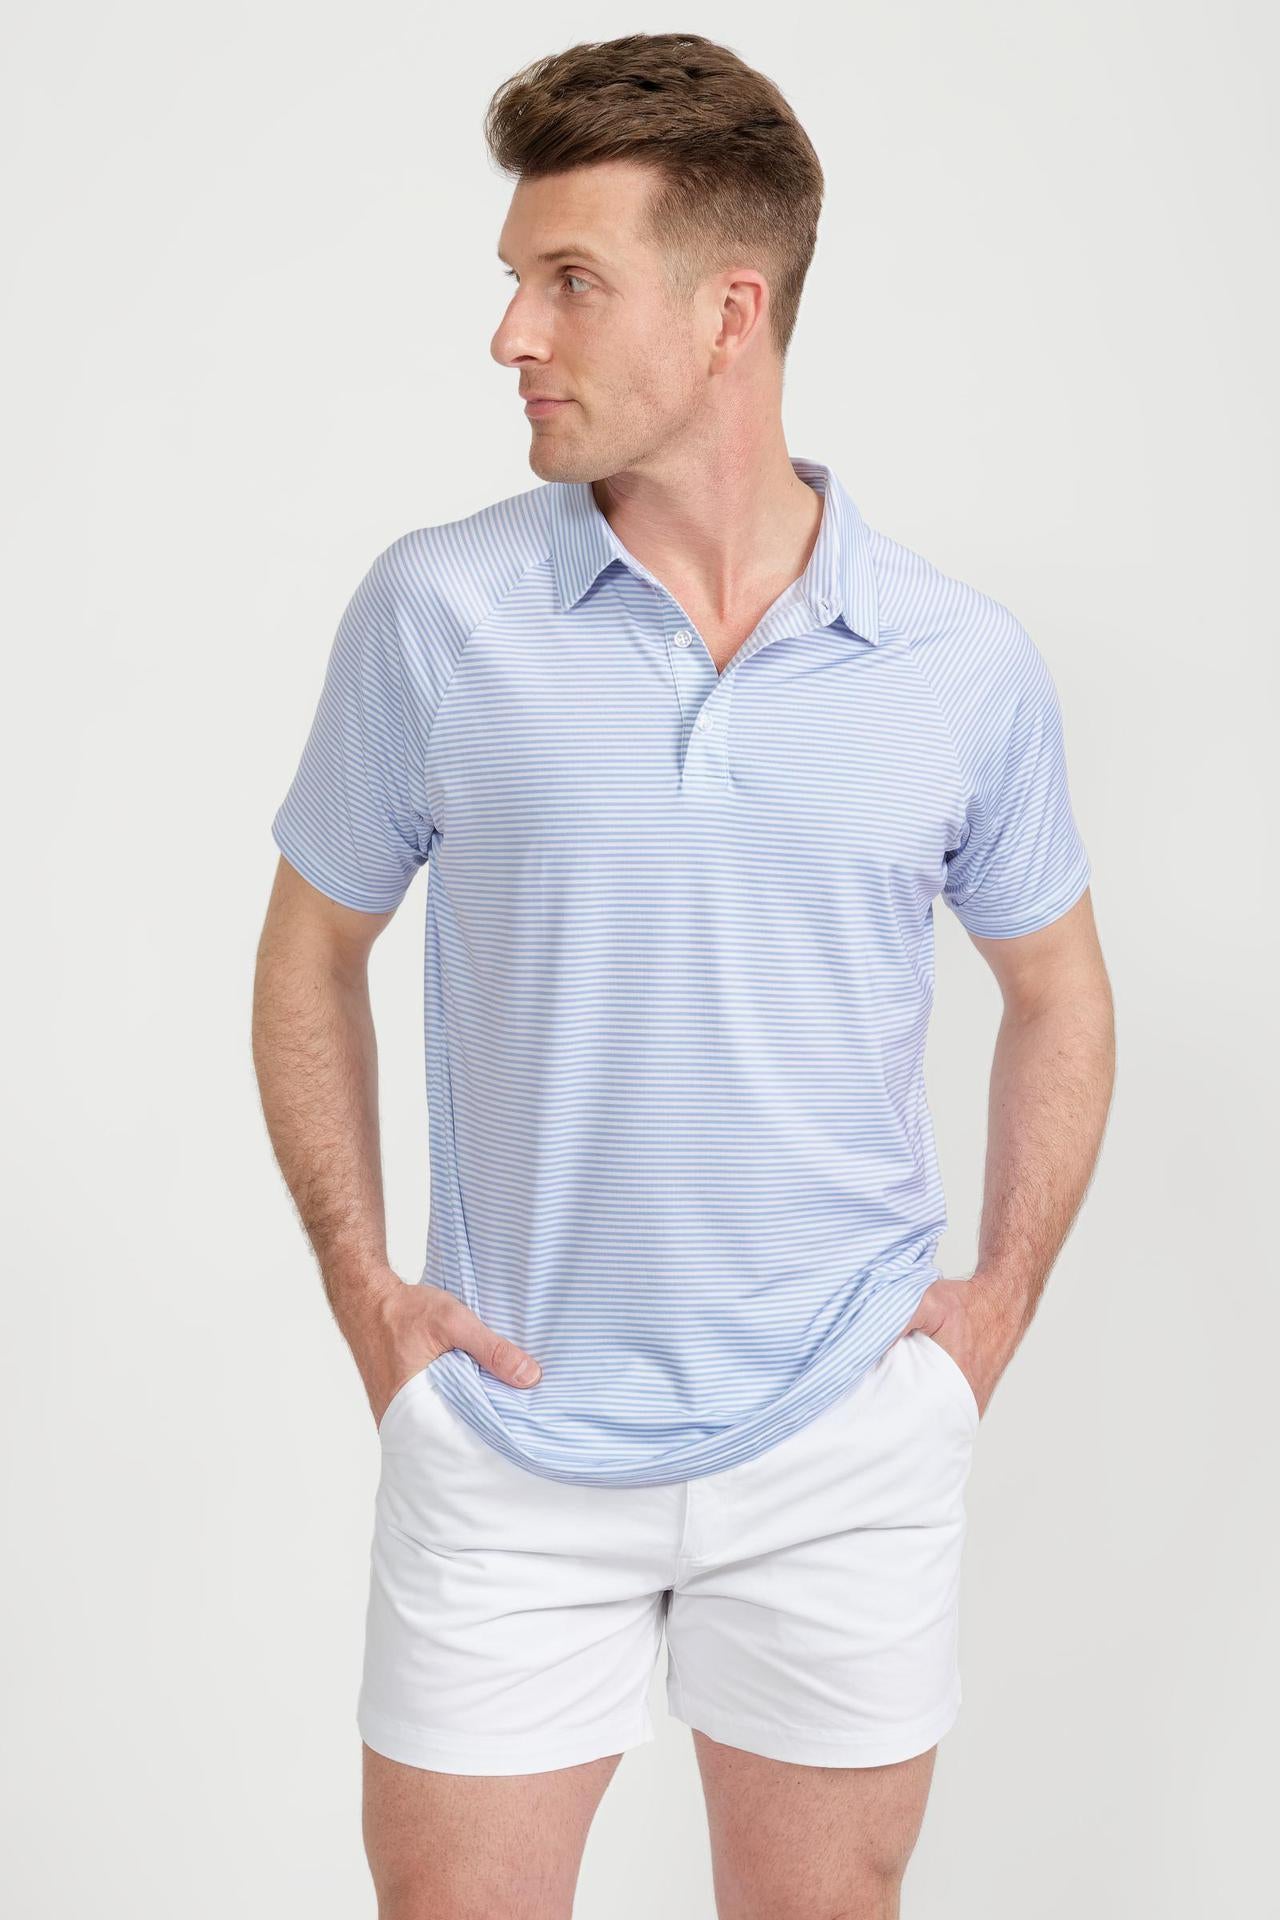 Men's Cooling Performance Golf Polo Shirt Blue Stripes